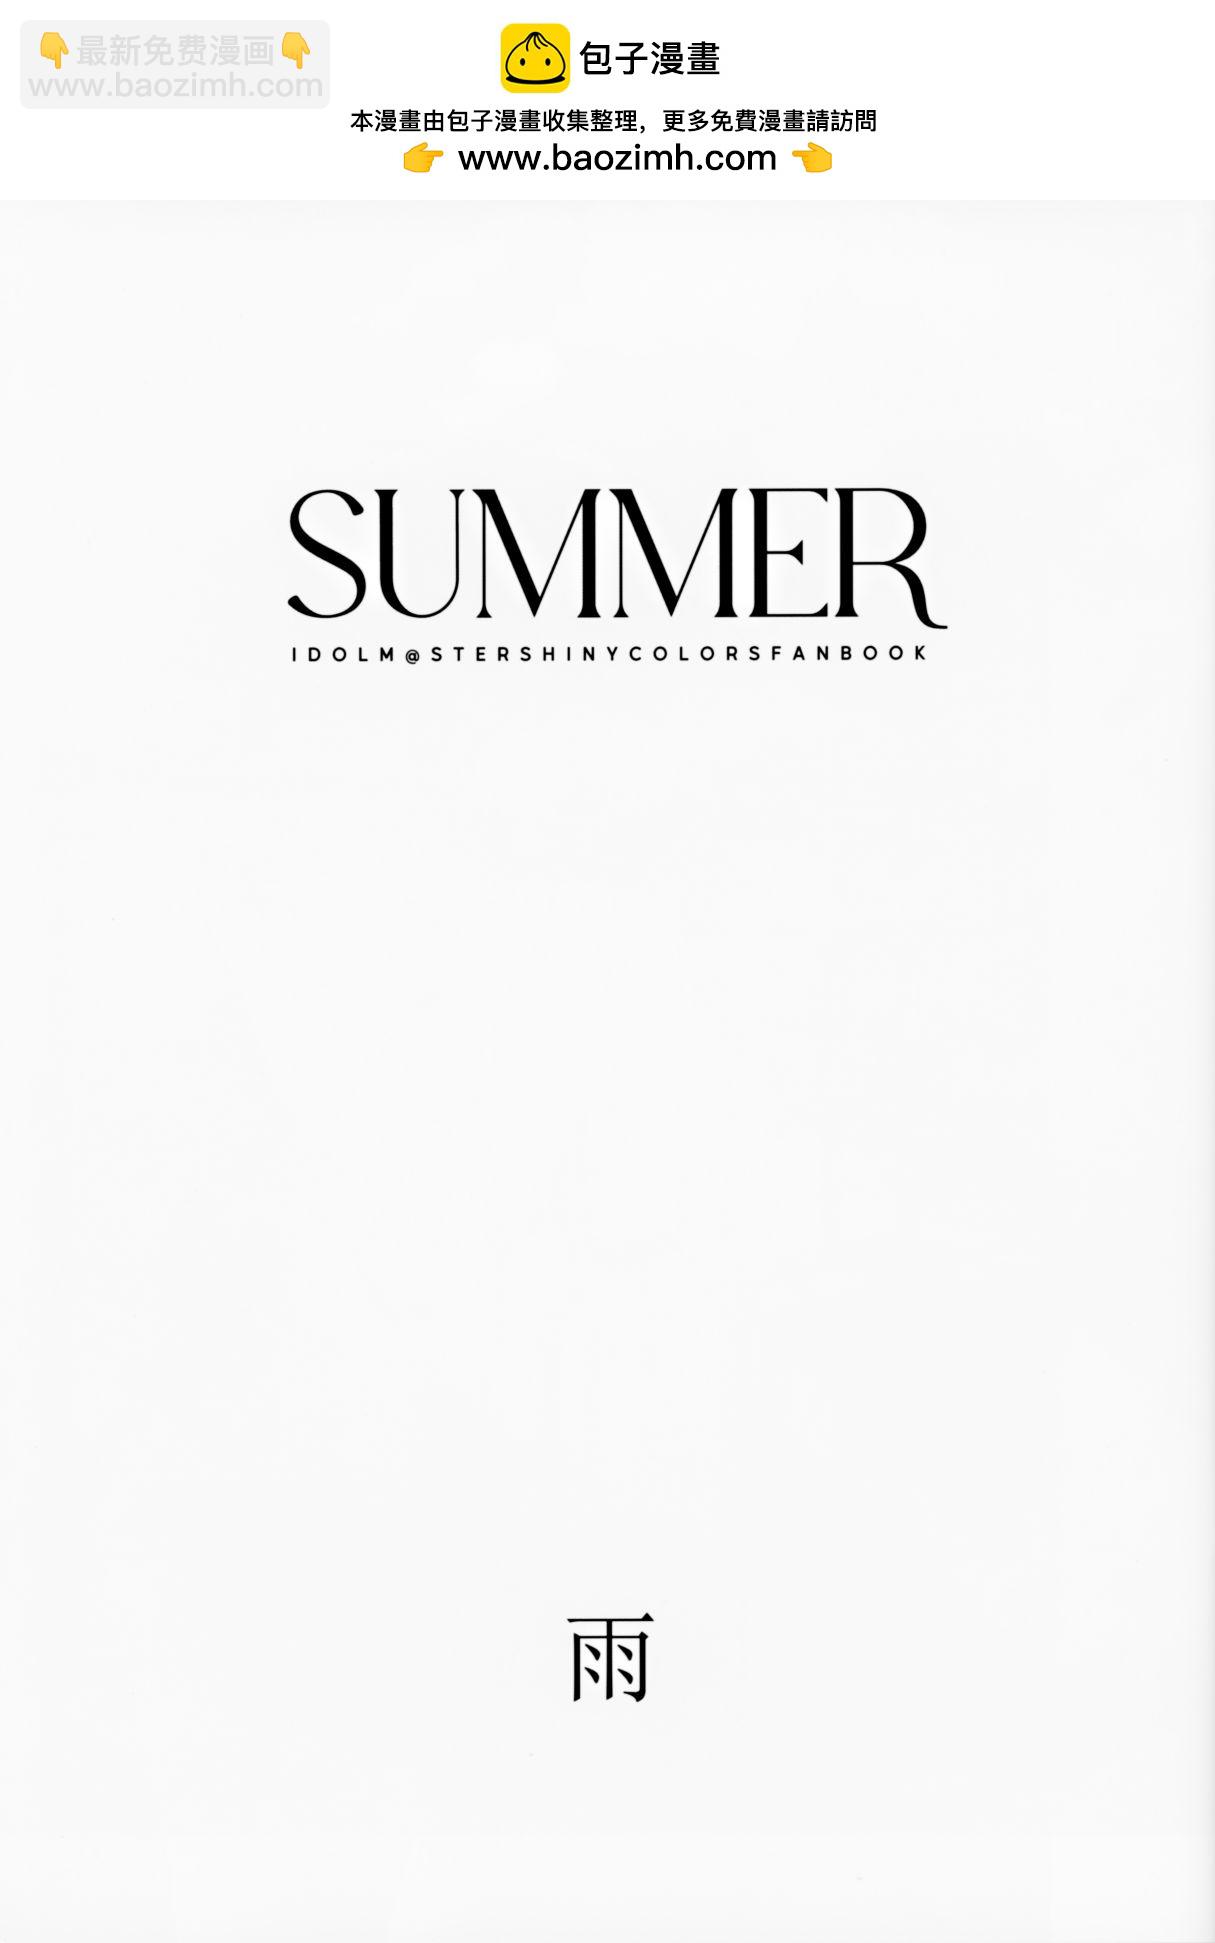 Summer - C100 - 2